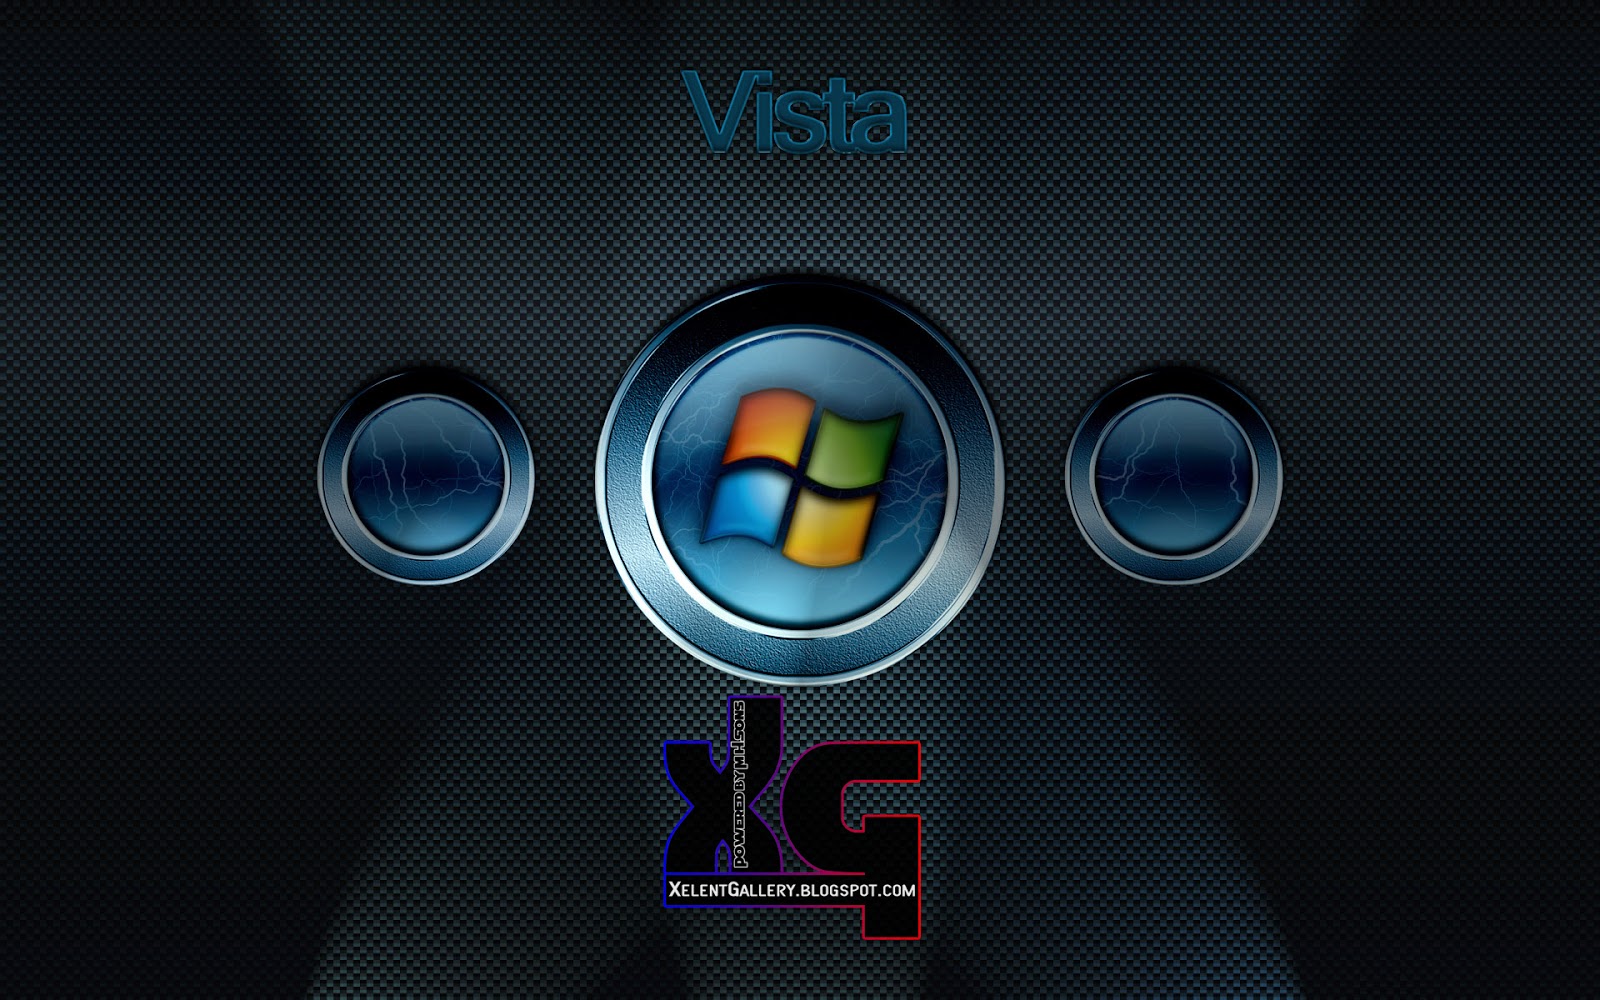 S1600 Premium Windows Vista Wallpaper Xelent Gallery Jpg